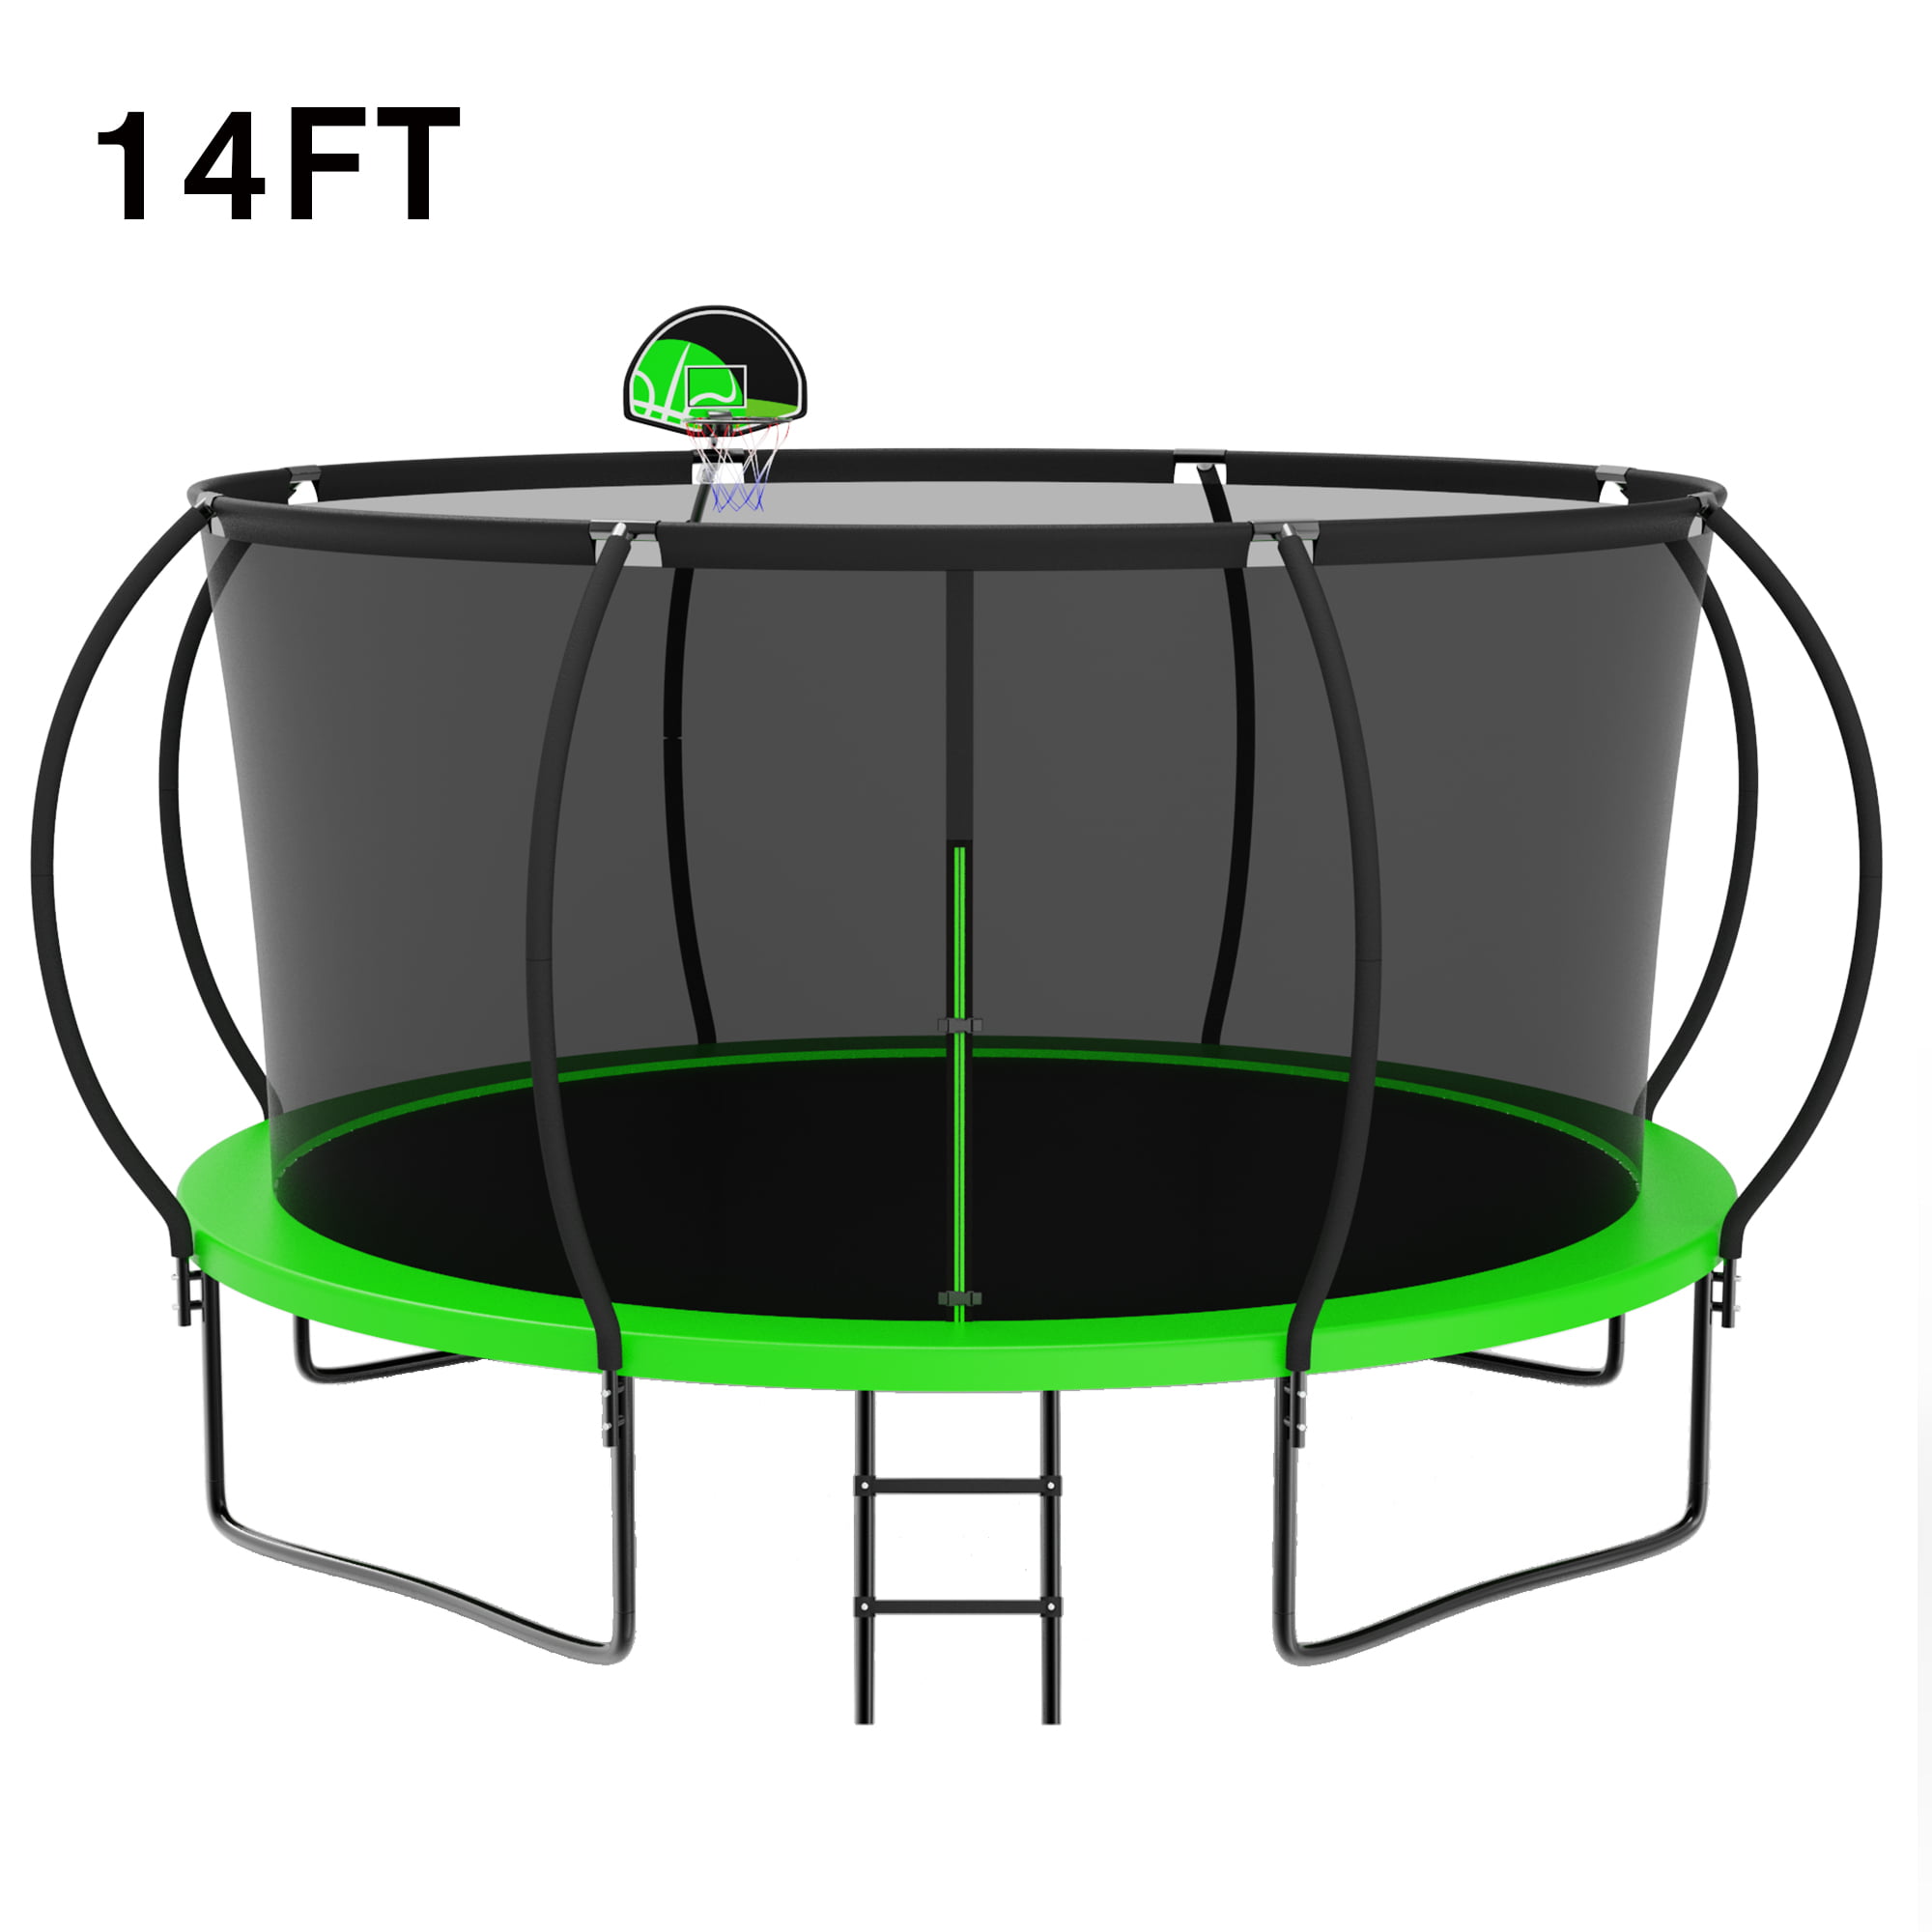 Seizeen 14 FT Trampoline, Jump Recreational Trampolines with Safety ...